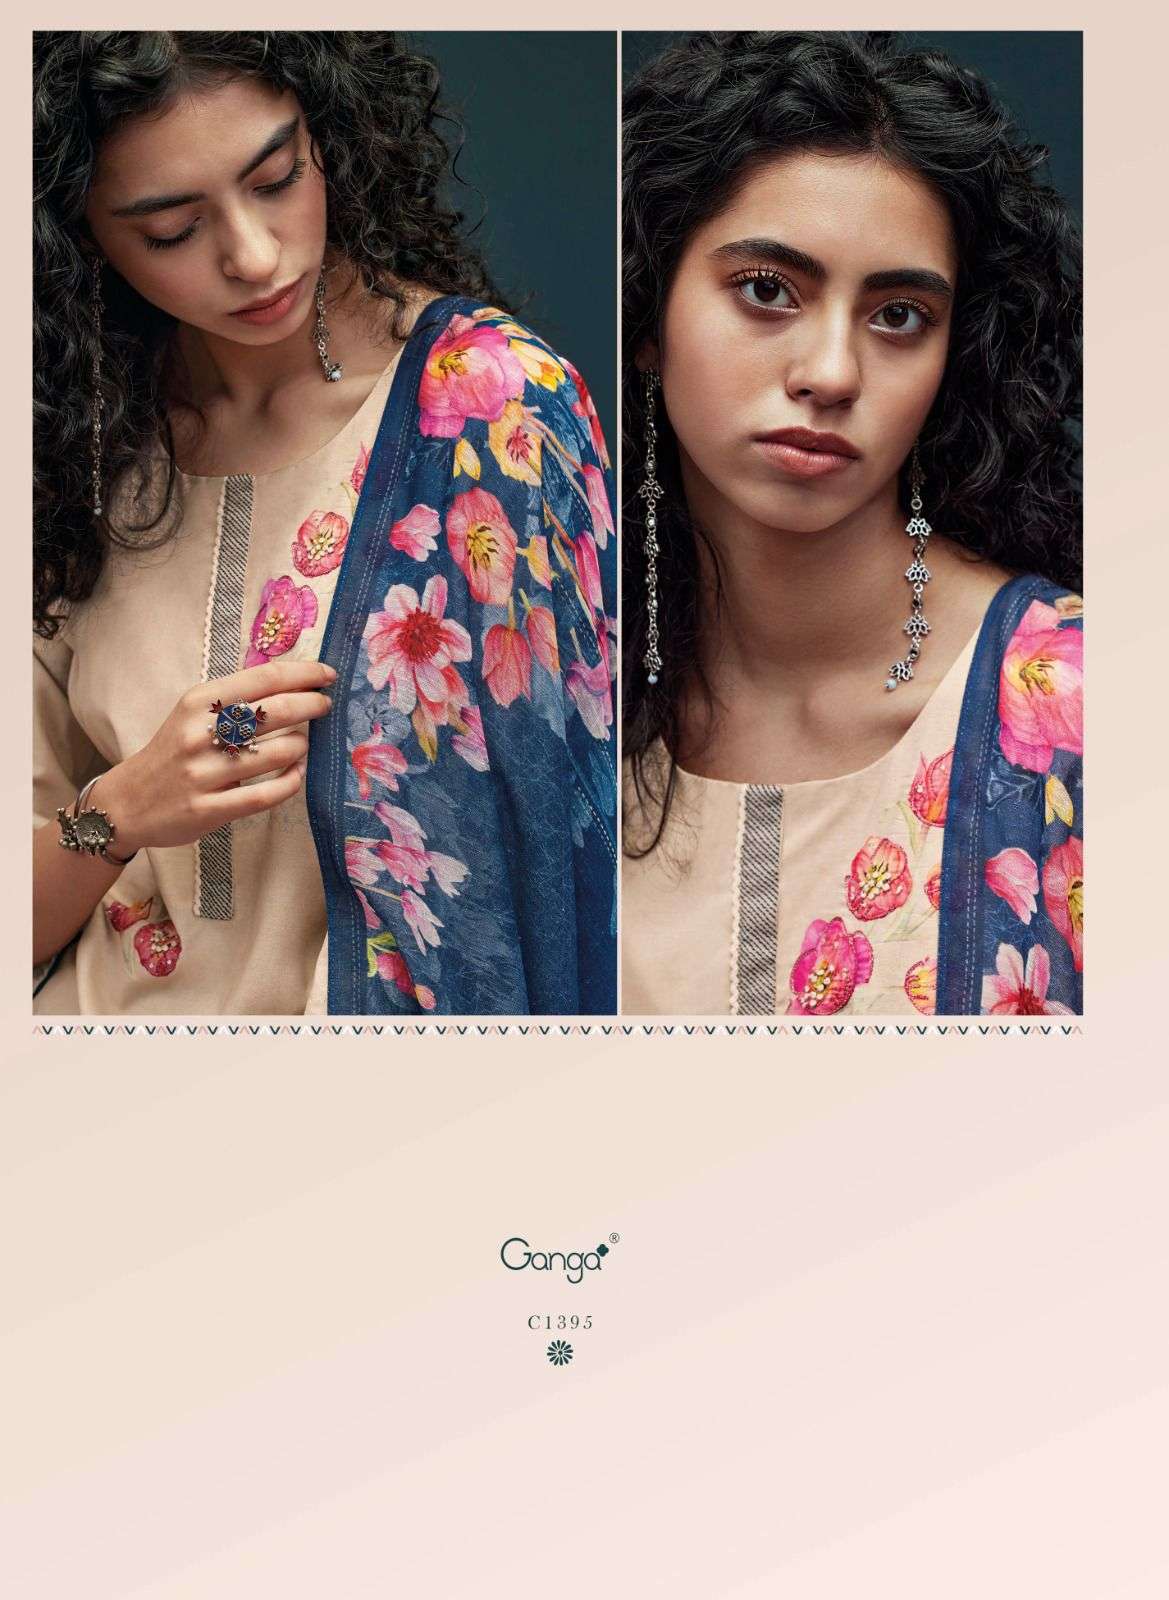 ganga meryan 1390-1395 series exclusive designer salwar suits catalogue online dealer surat 